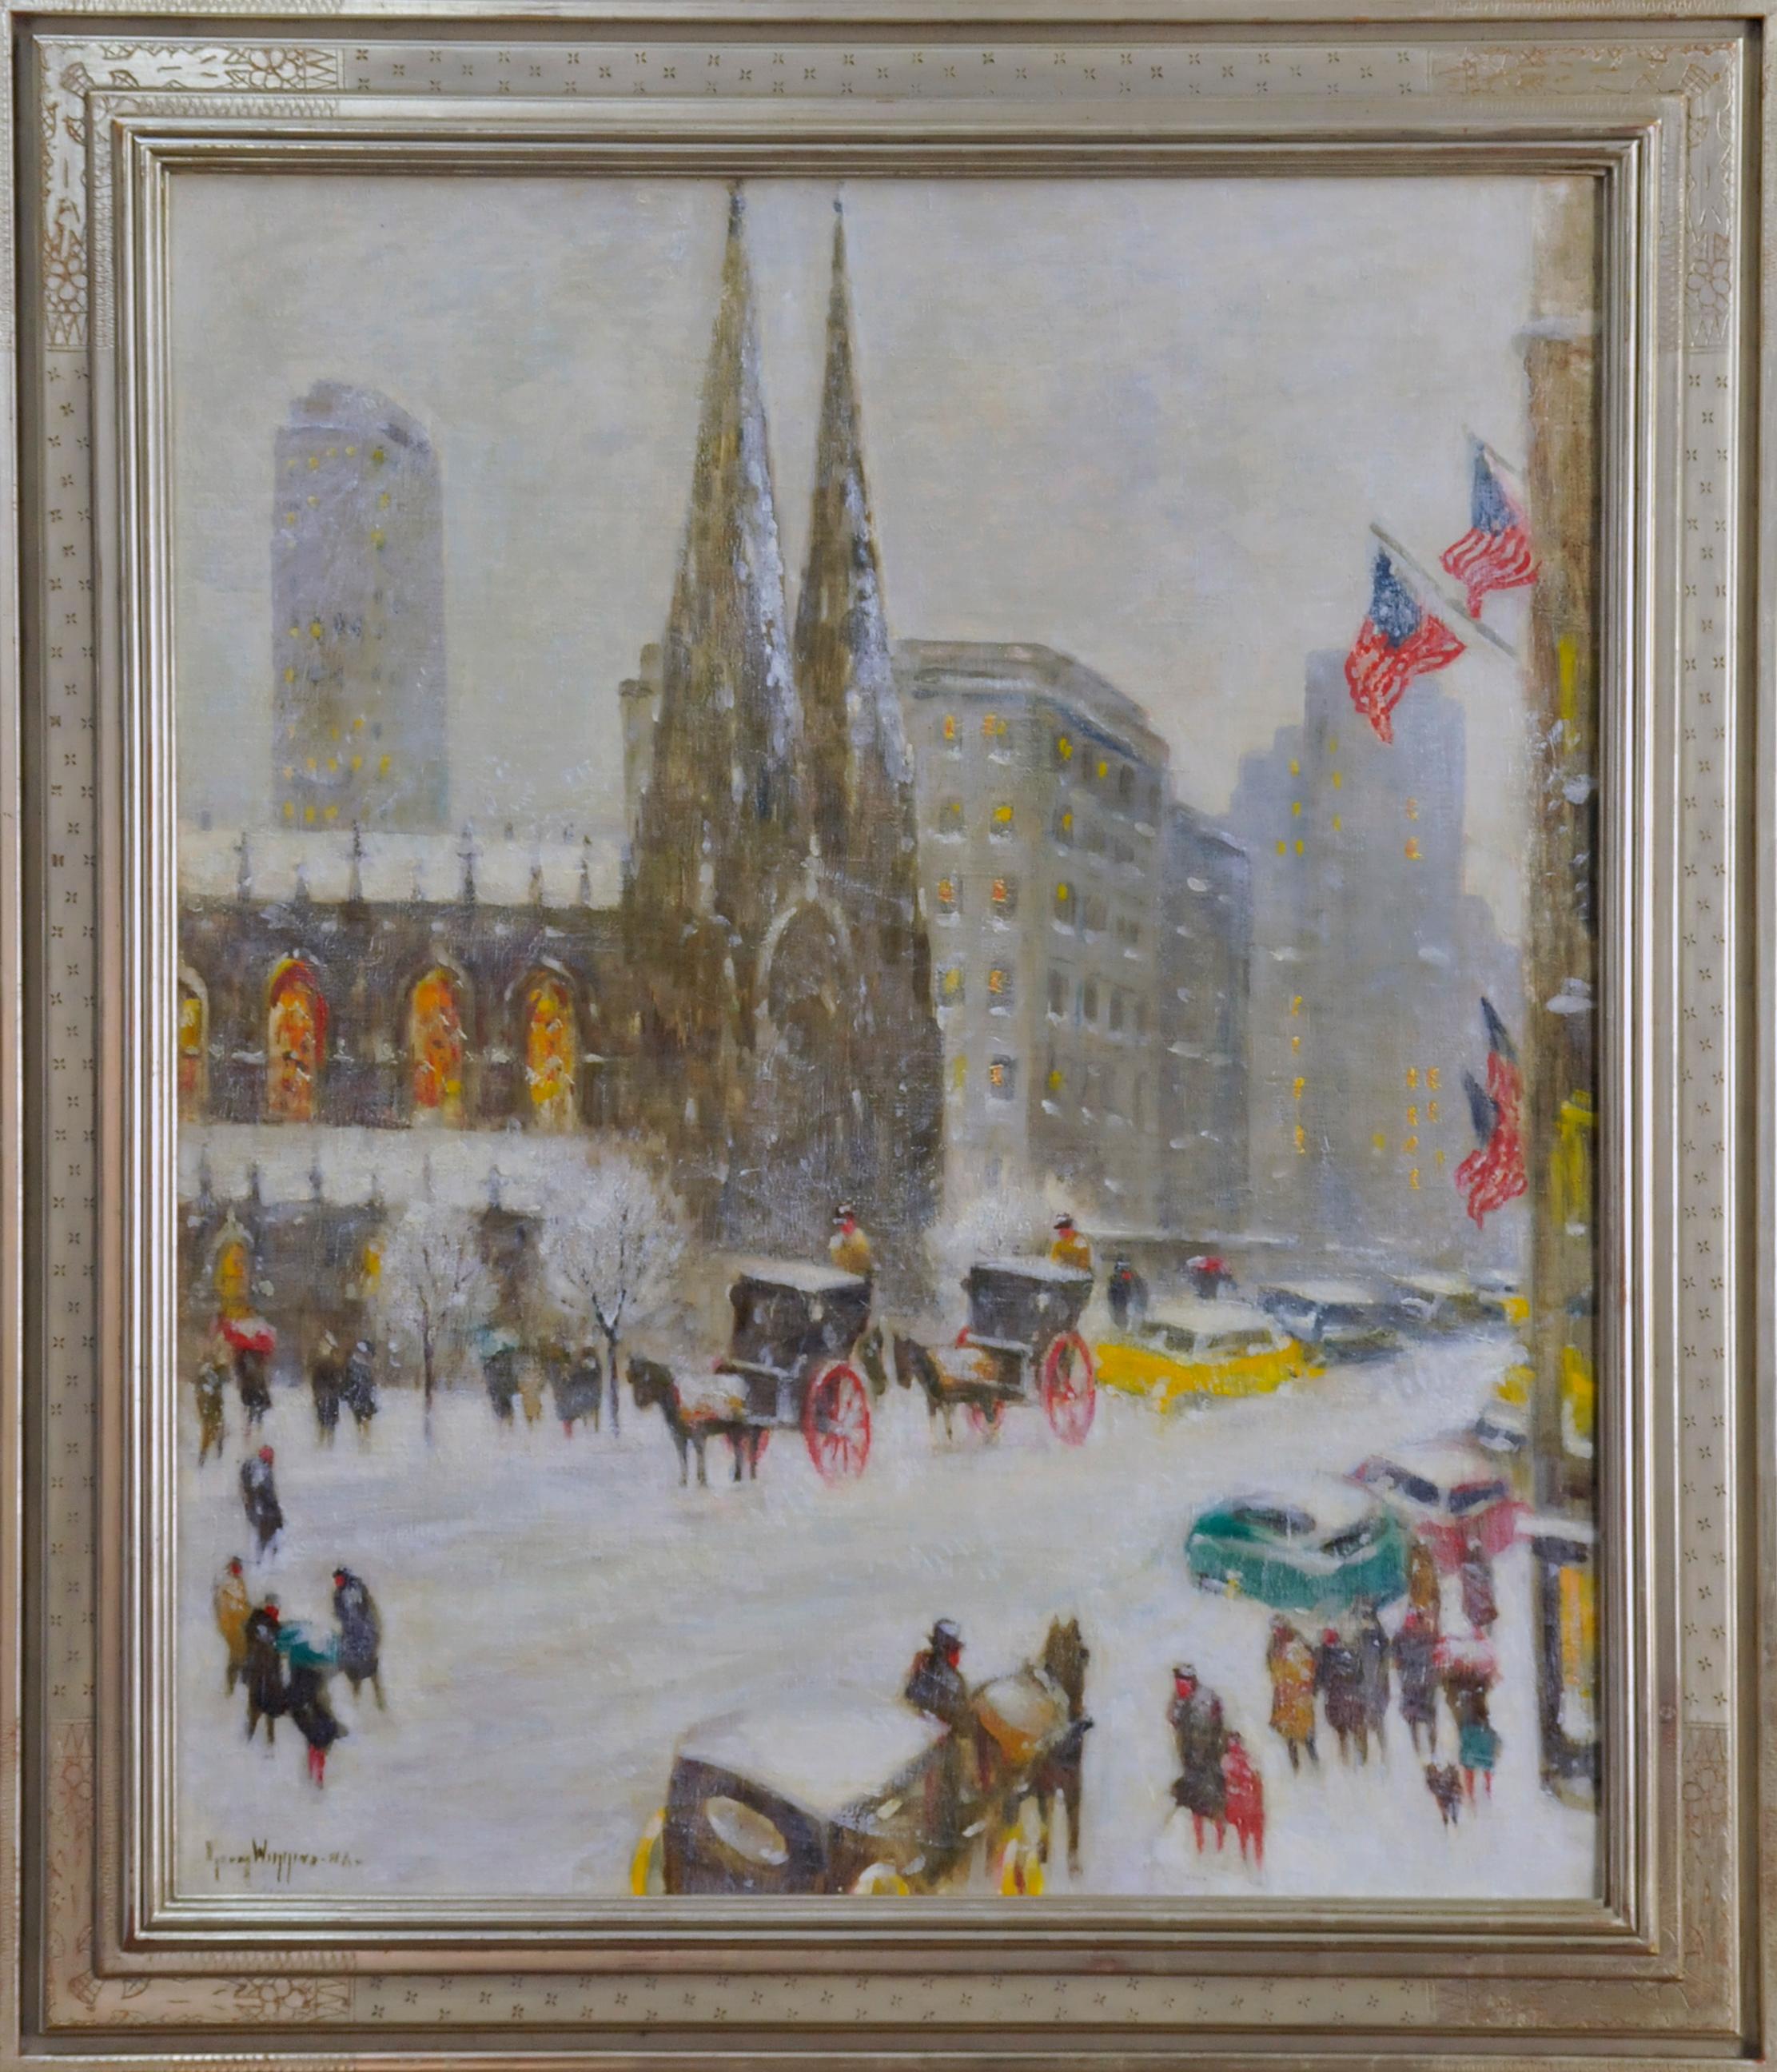 Guy Wiggins Figurative Painting - One Winter's Day, American Impressionist New York City Street Scene 1958, Framed